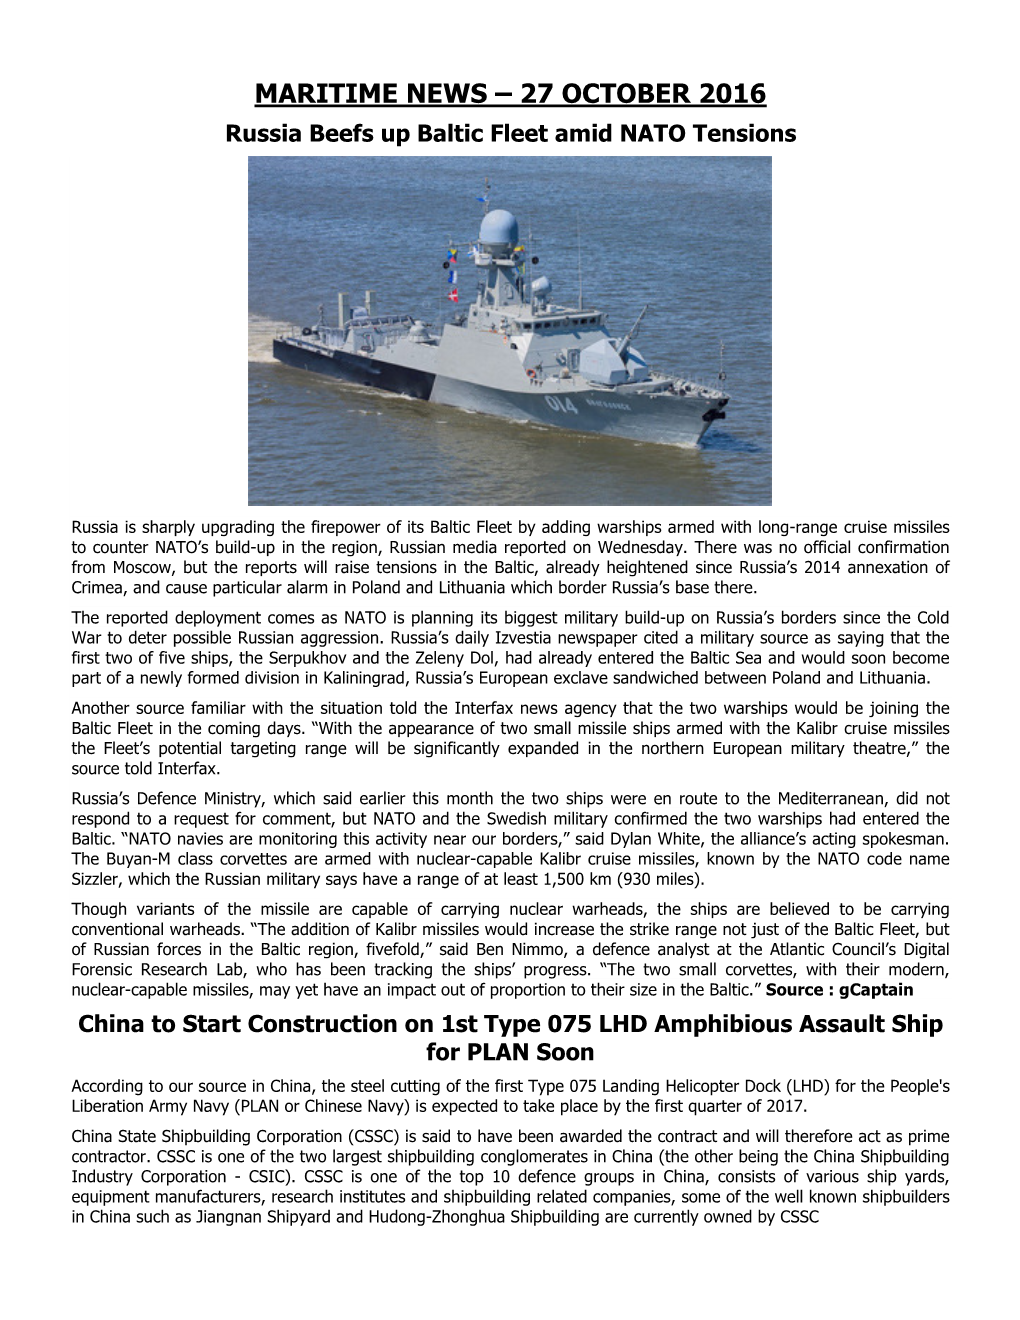 MARITIME NEWS – 27 OCTOBER 2016 Russia Beefs up Baltic Fleet Amid NATO Tensions